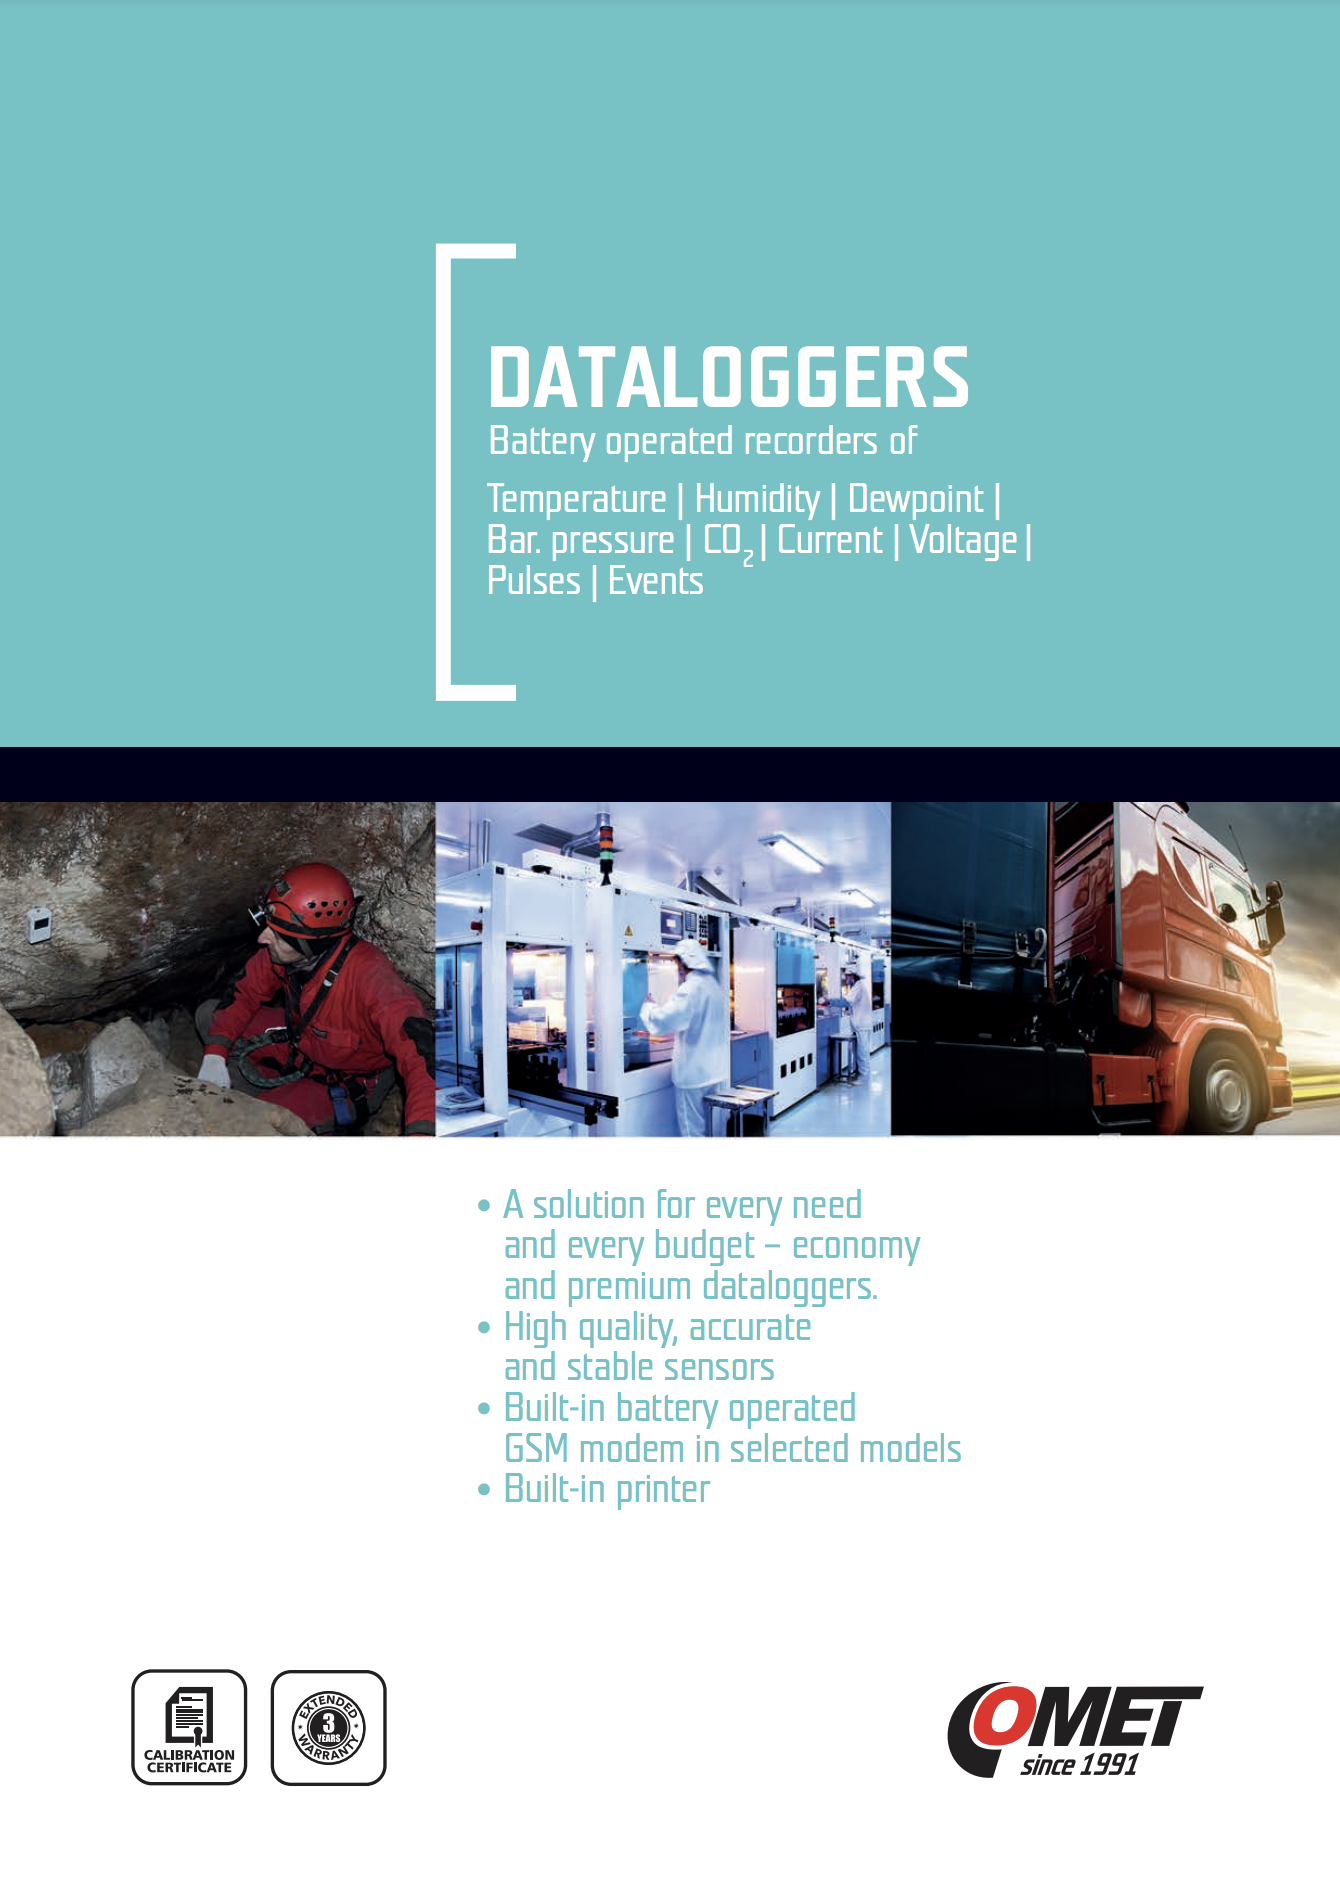 Comet Dataloggers